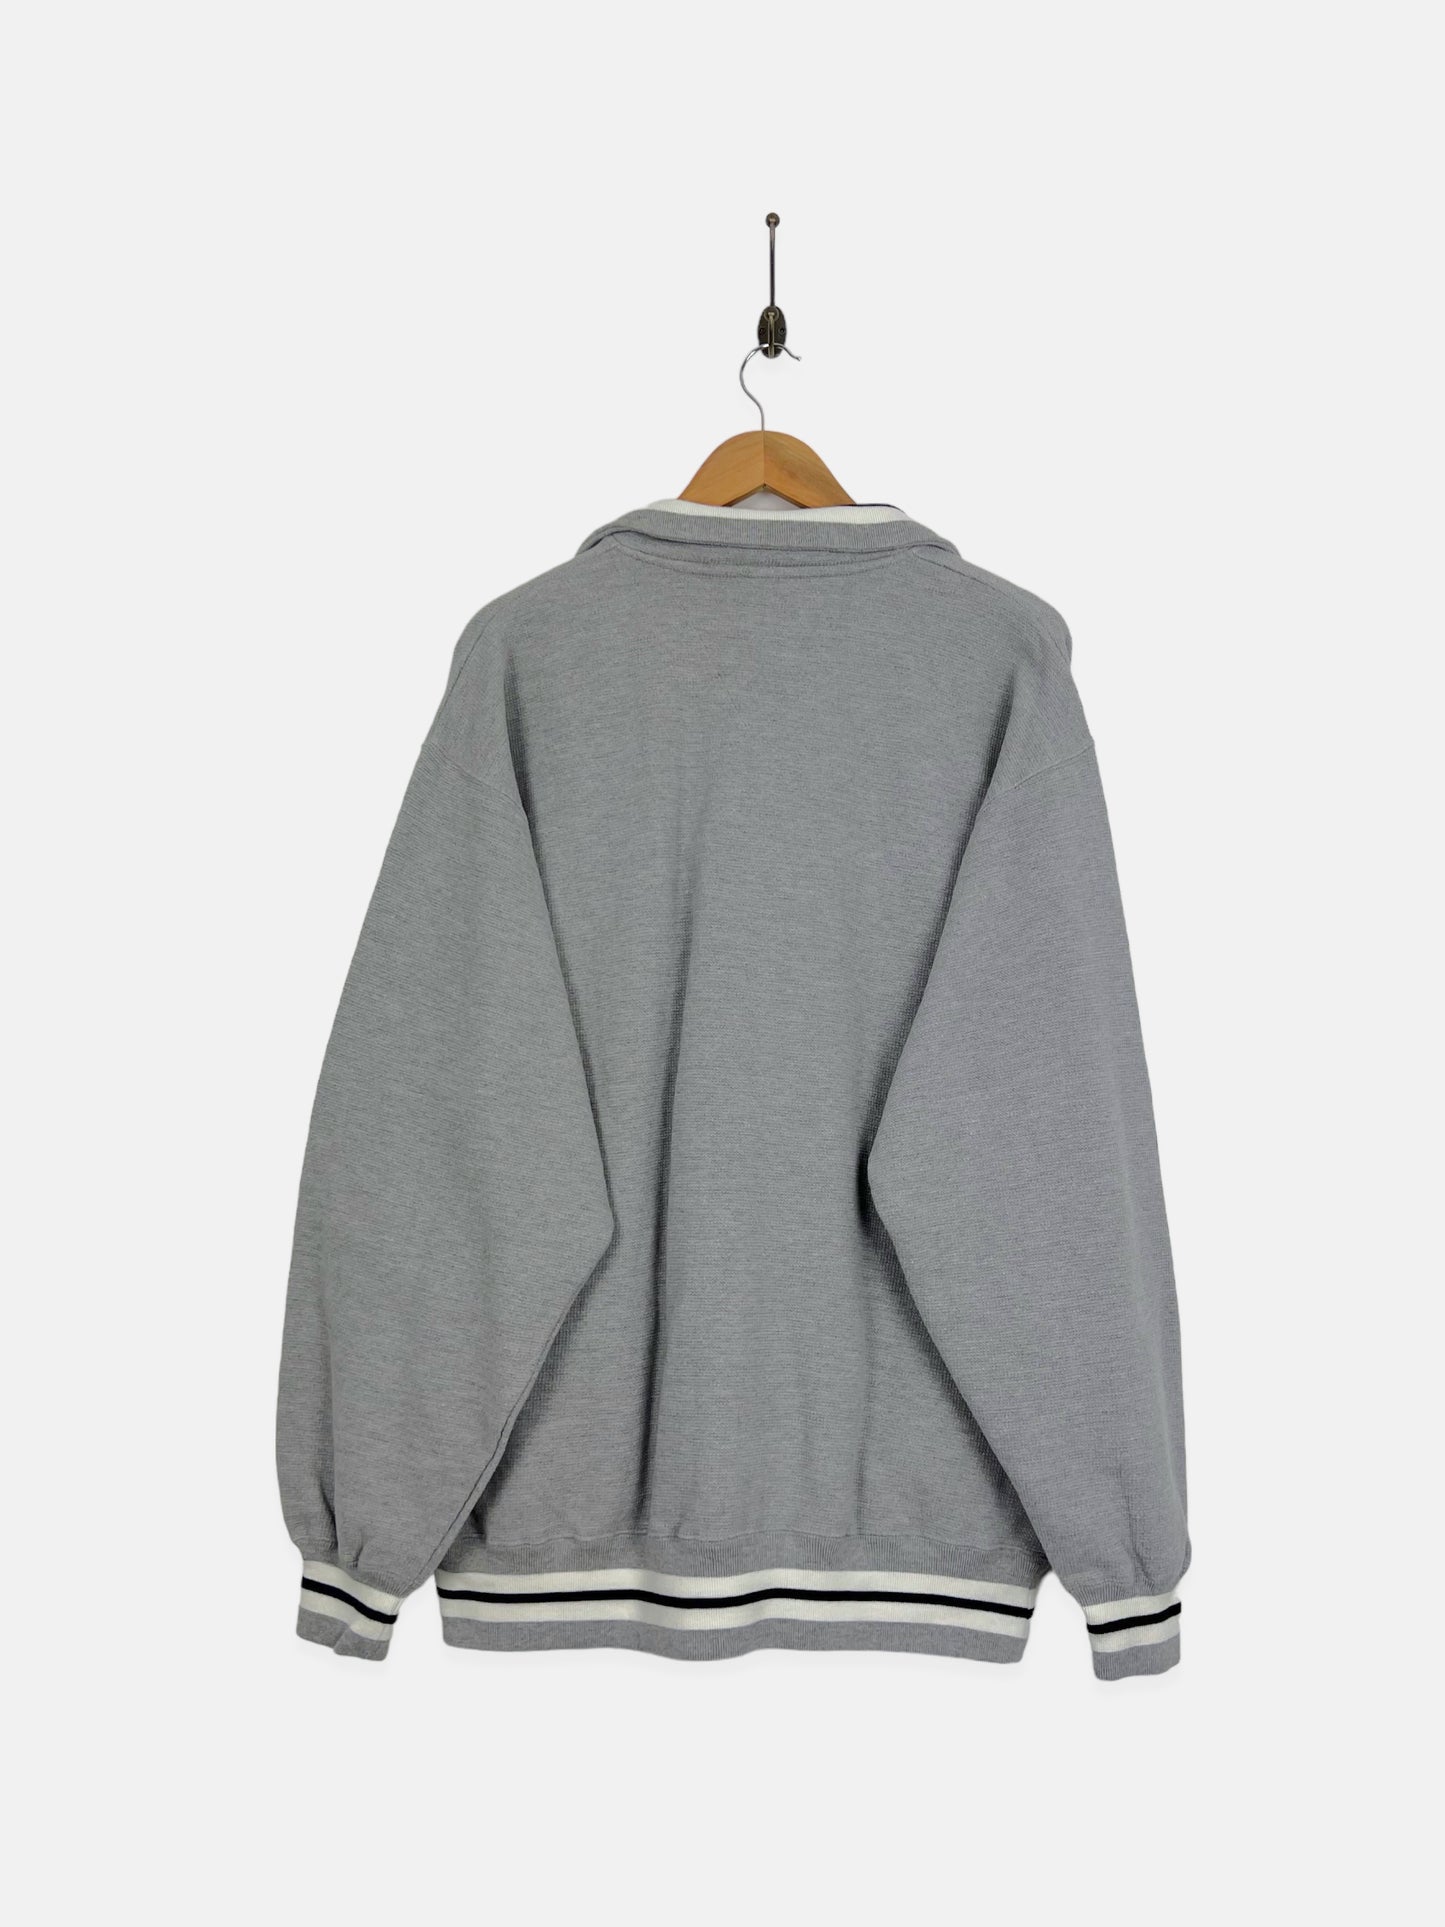 90's Heavyweight Grey Vintage Quarterzip Sweatshirt Size XL